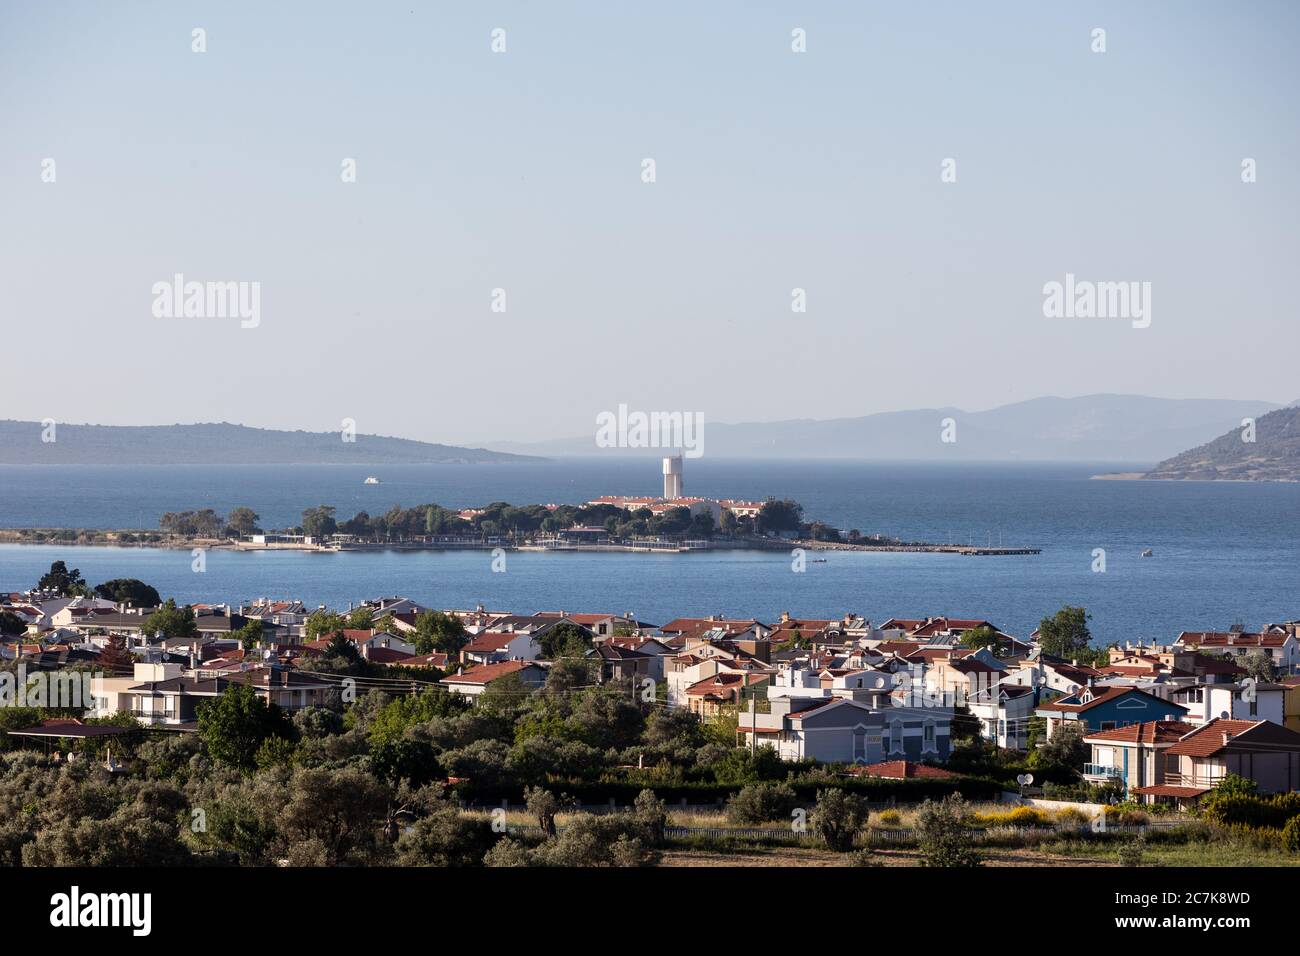 Cesmealti / Urla / Izmir / Turkey, Views from a small sea town Stock Photo